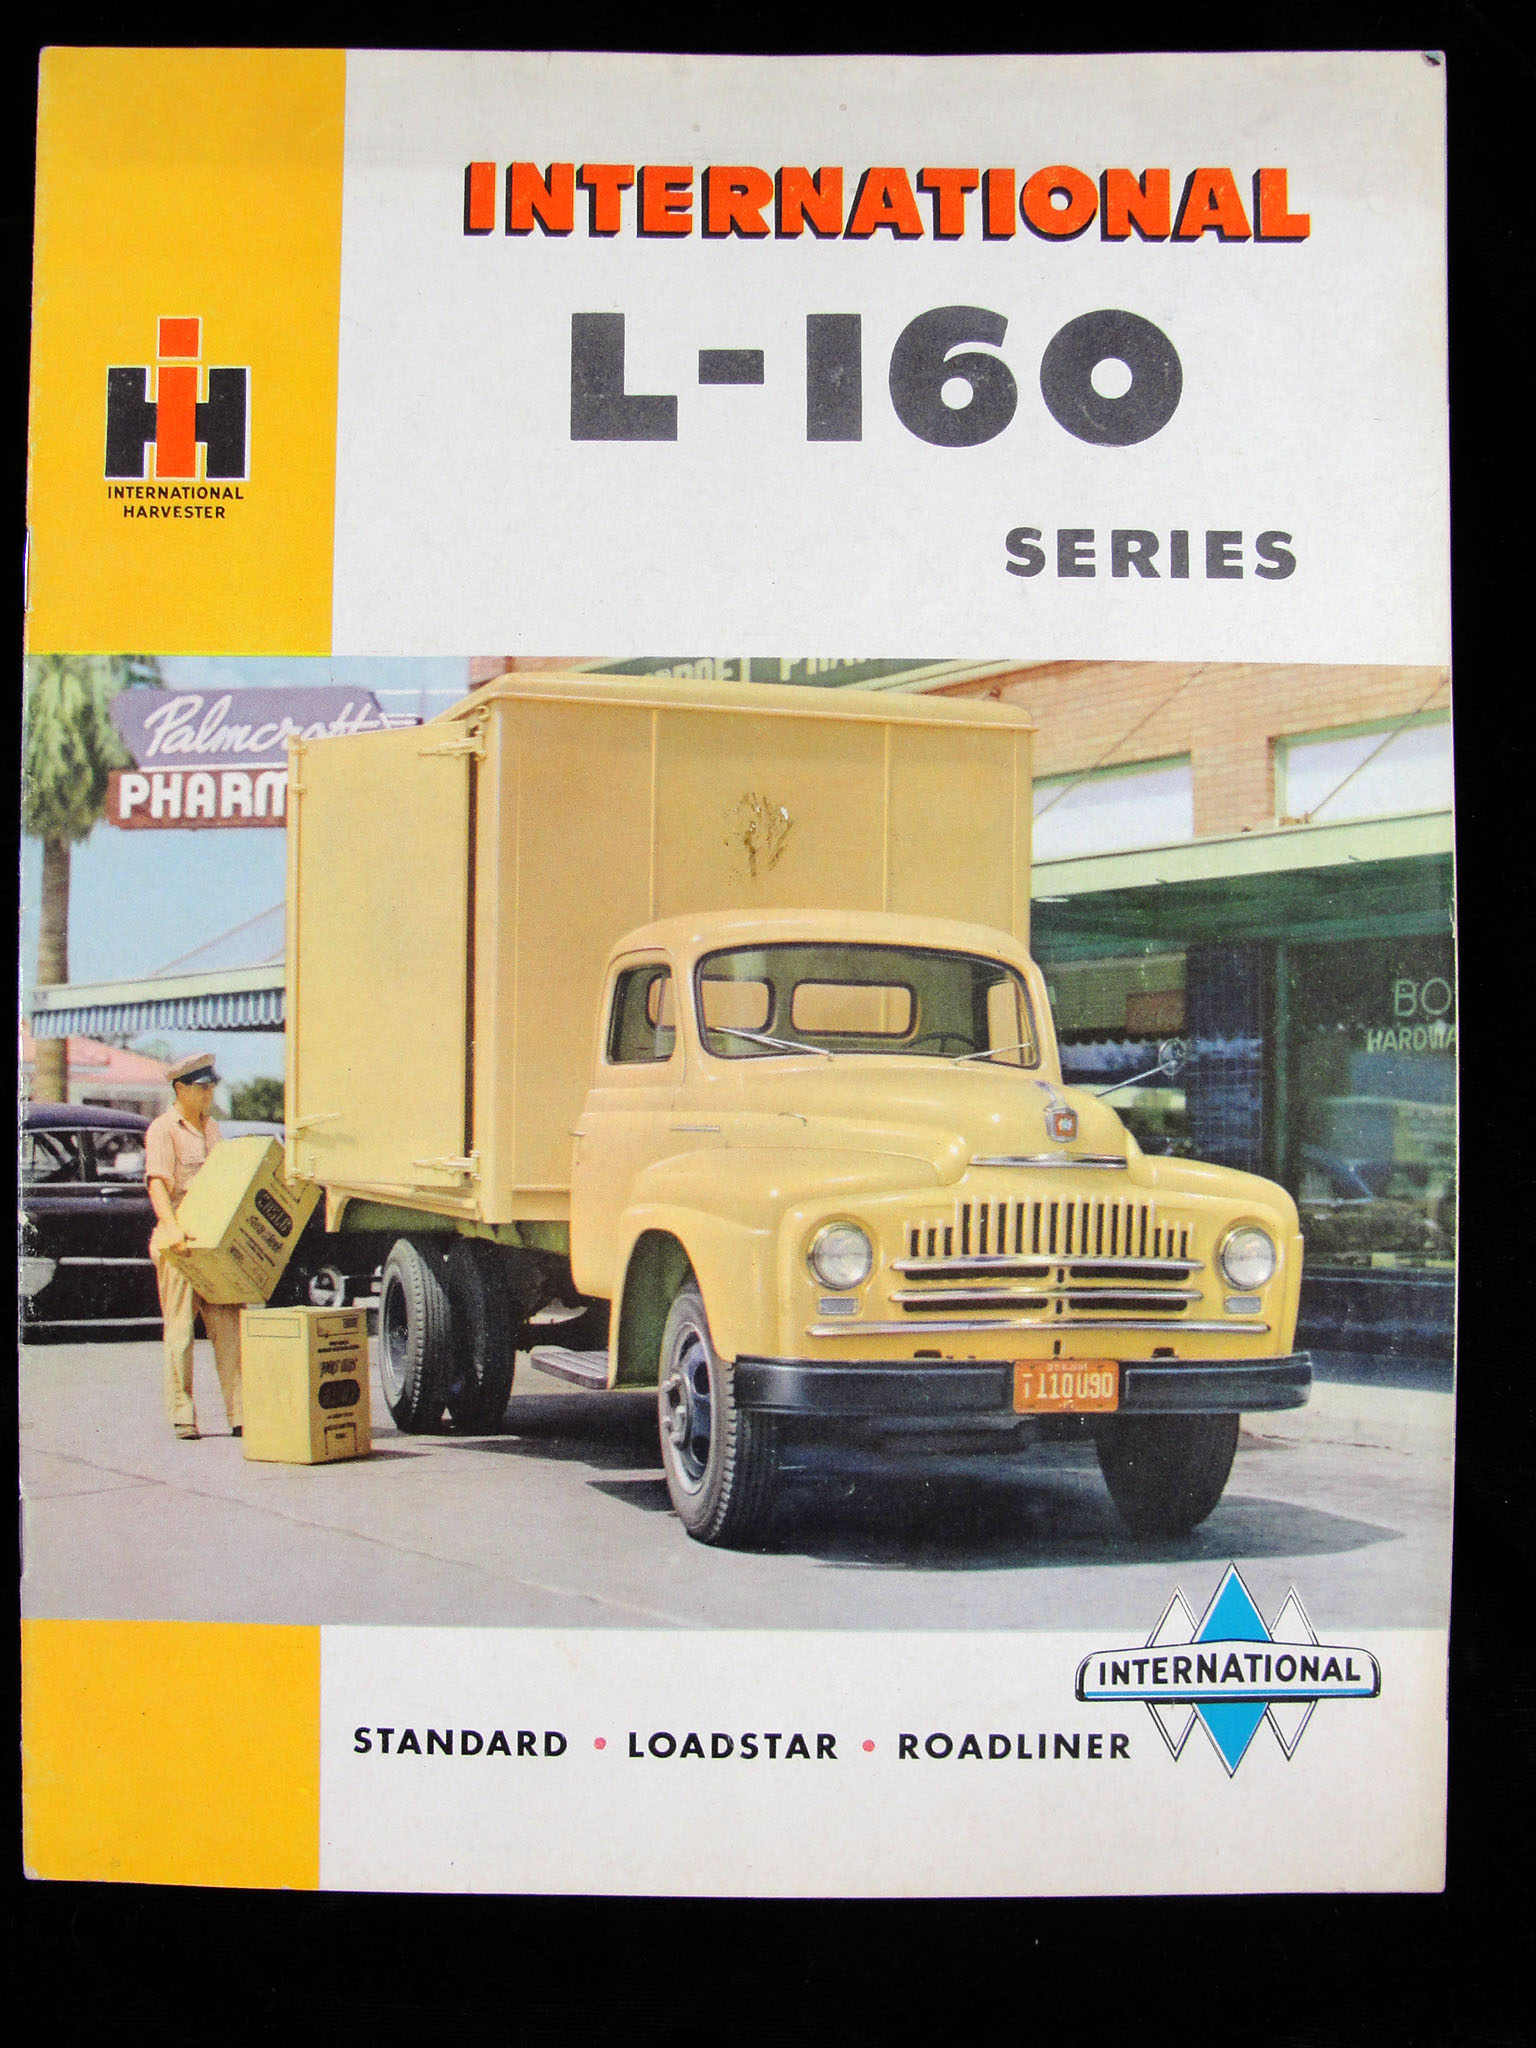 International L-160 series. MotoBurg